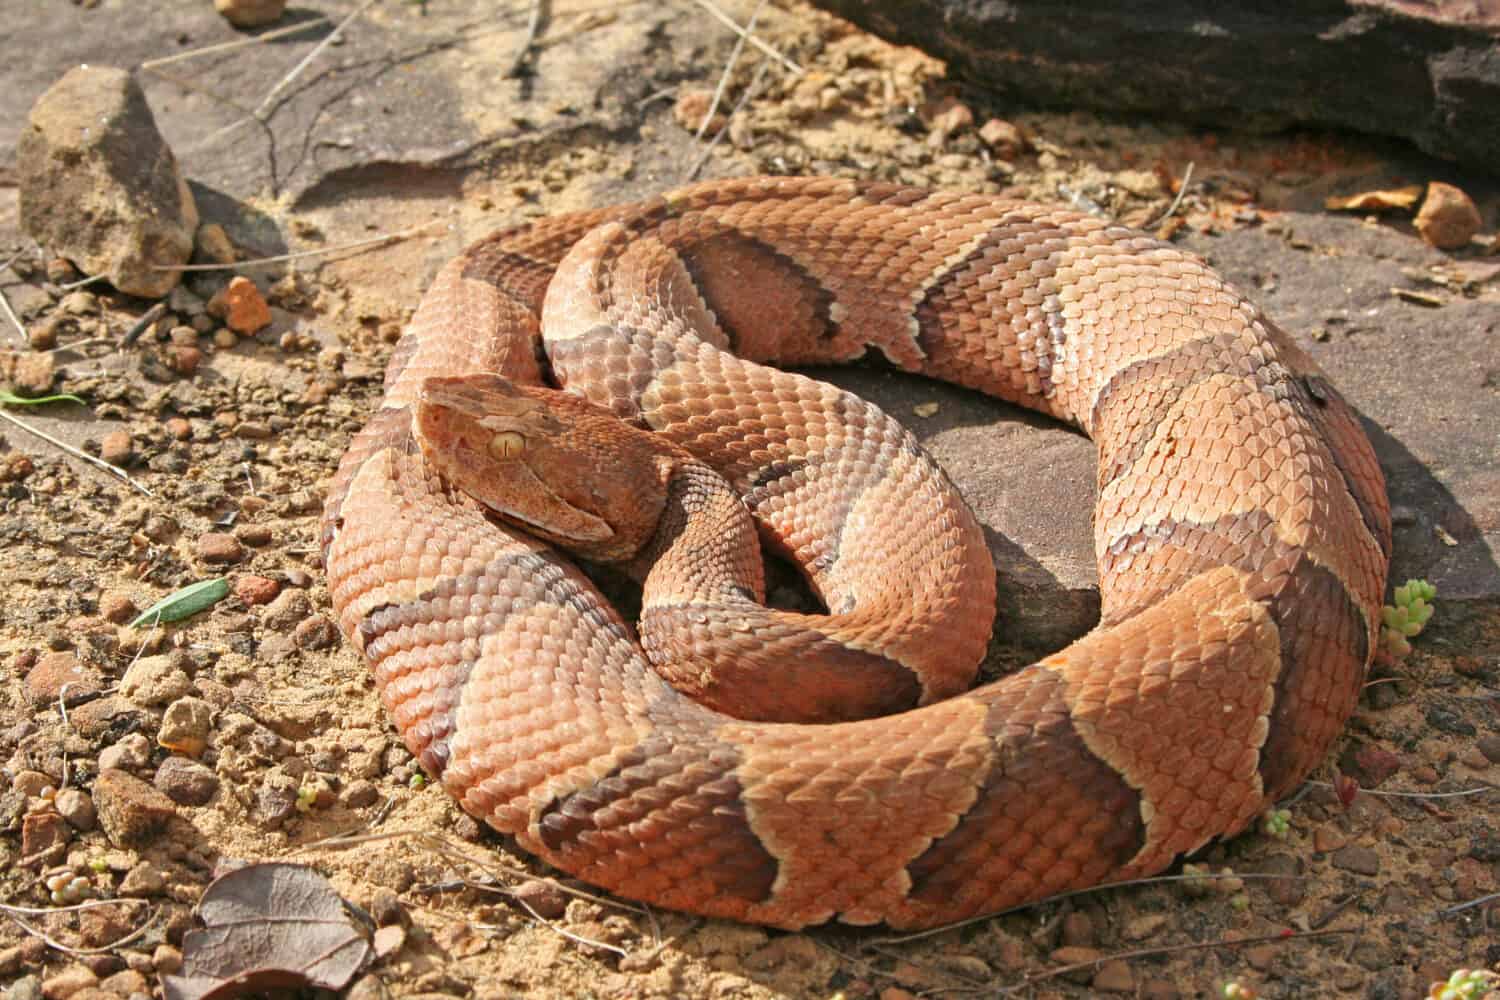 A copperhead snake, a species of venomous pit viper native to North America. 